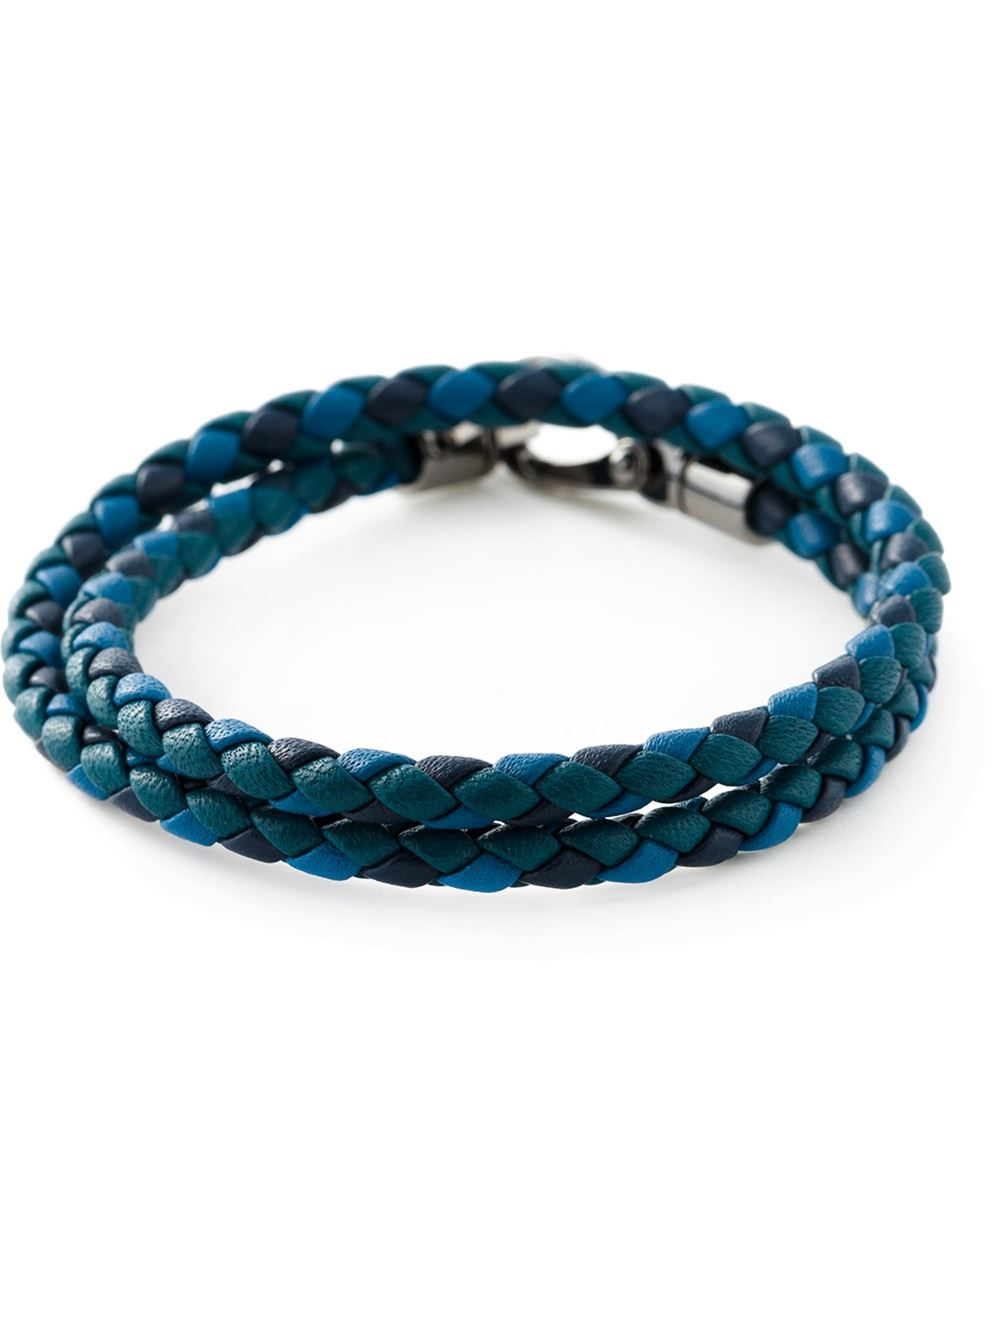 Tod's Braided Leather Bracelet in Blue for Men - Lyst